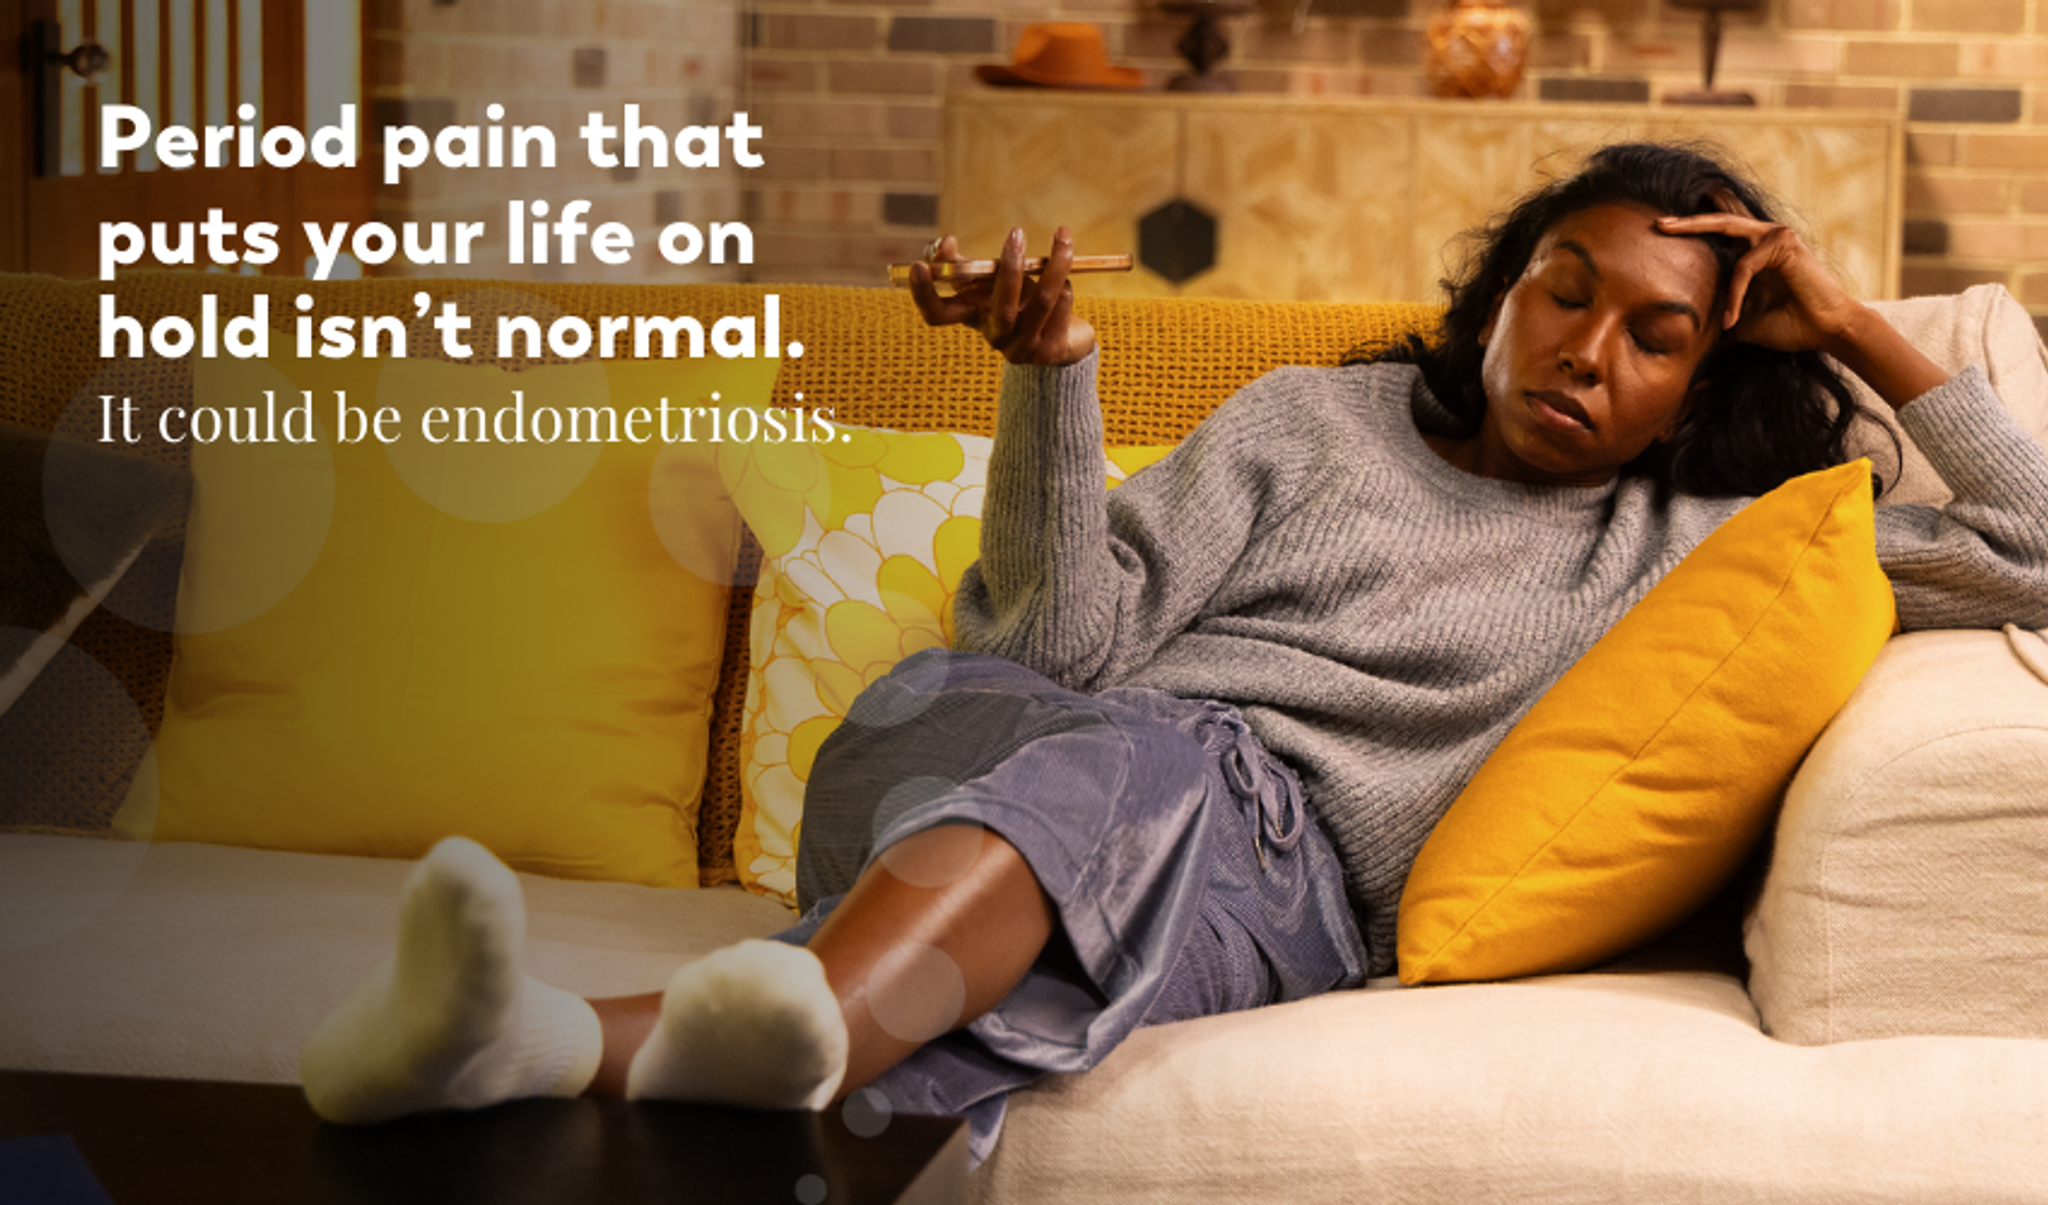 Australian campaign spotlights on endometriosis symptoms